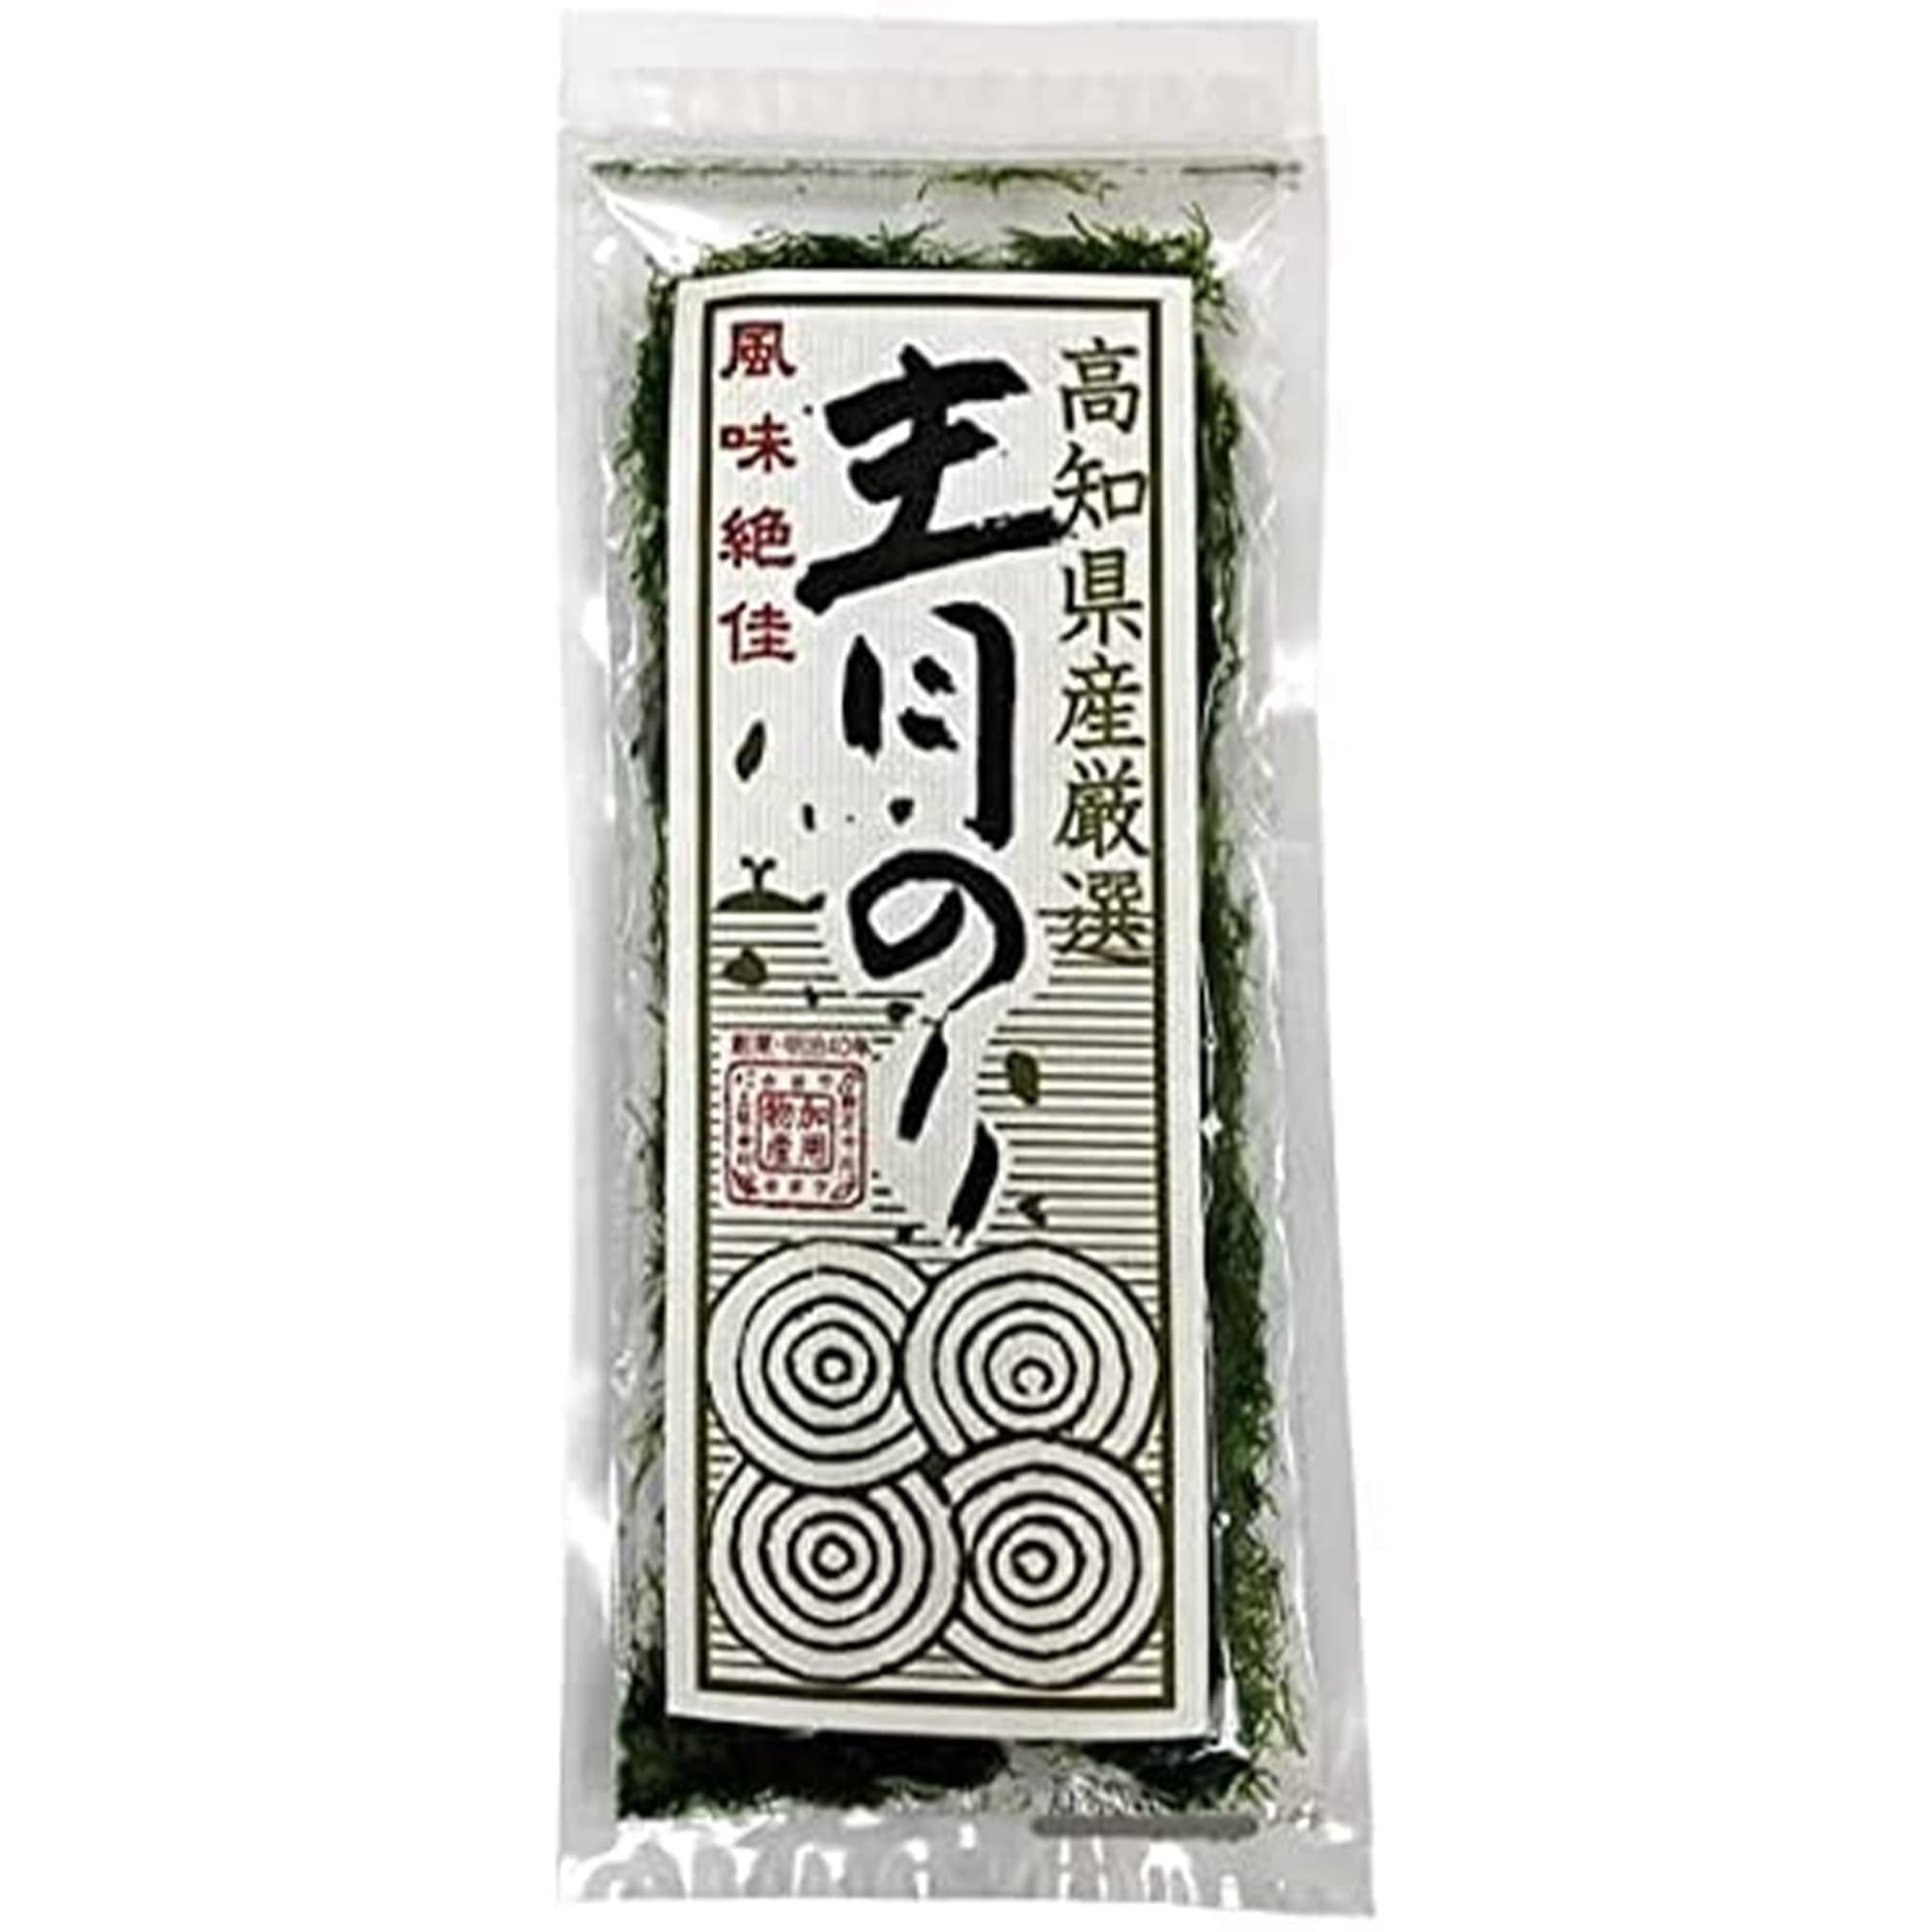 Aonori Japanese Green Laver Seaweed Strands 10g